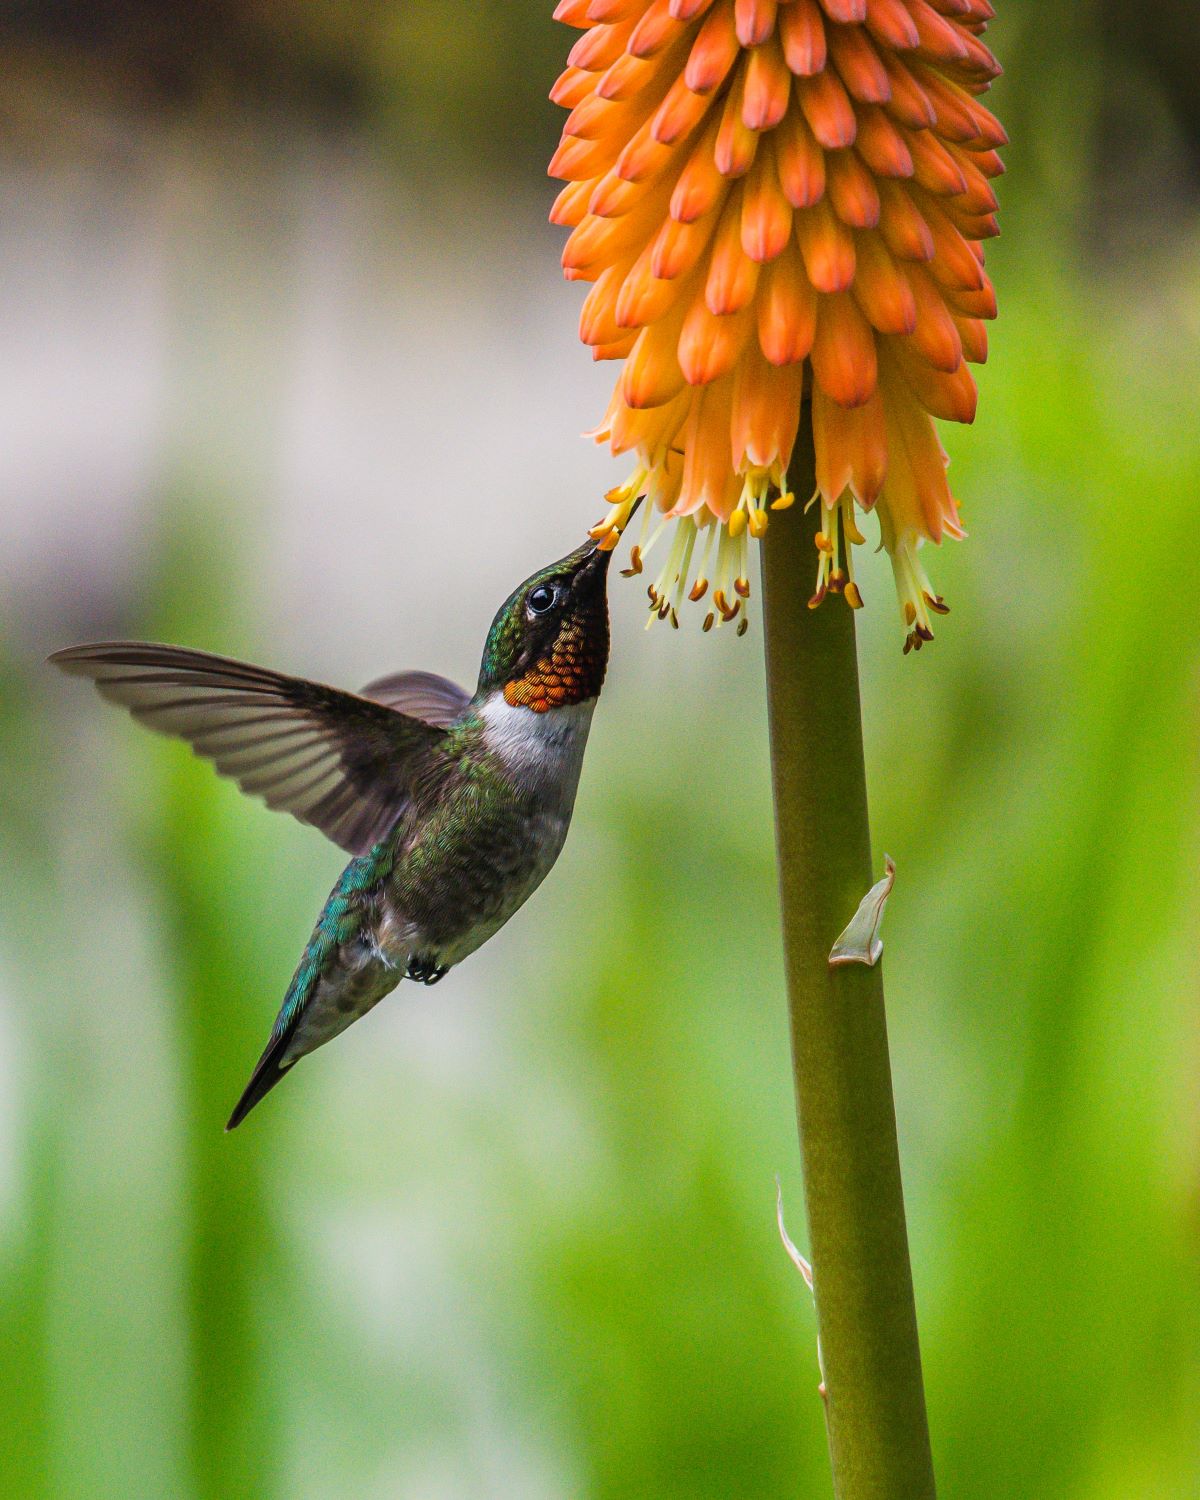 Humming Bird Drinking Nectar From Orange Flower